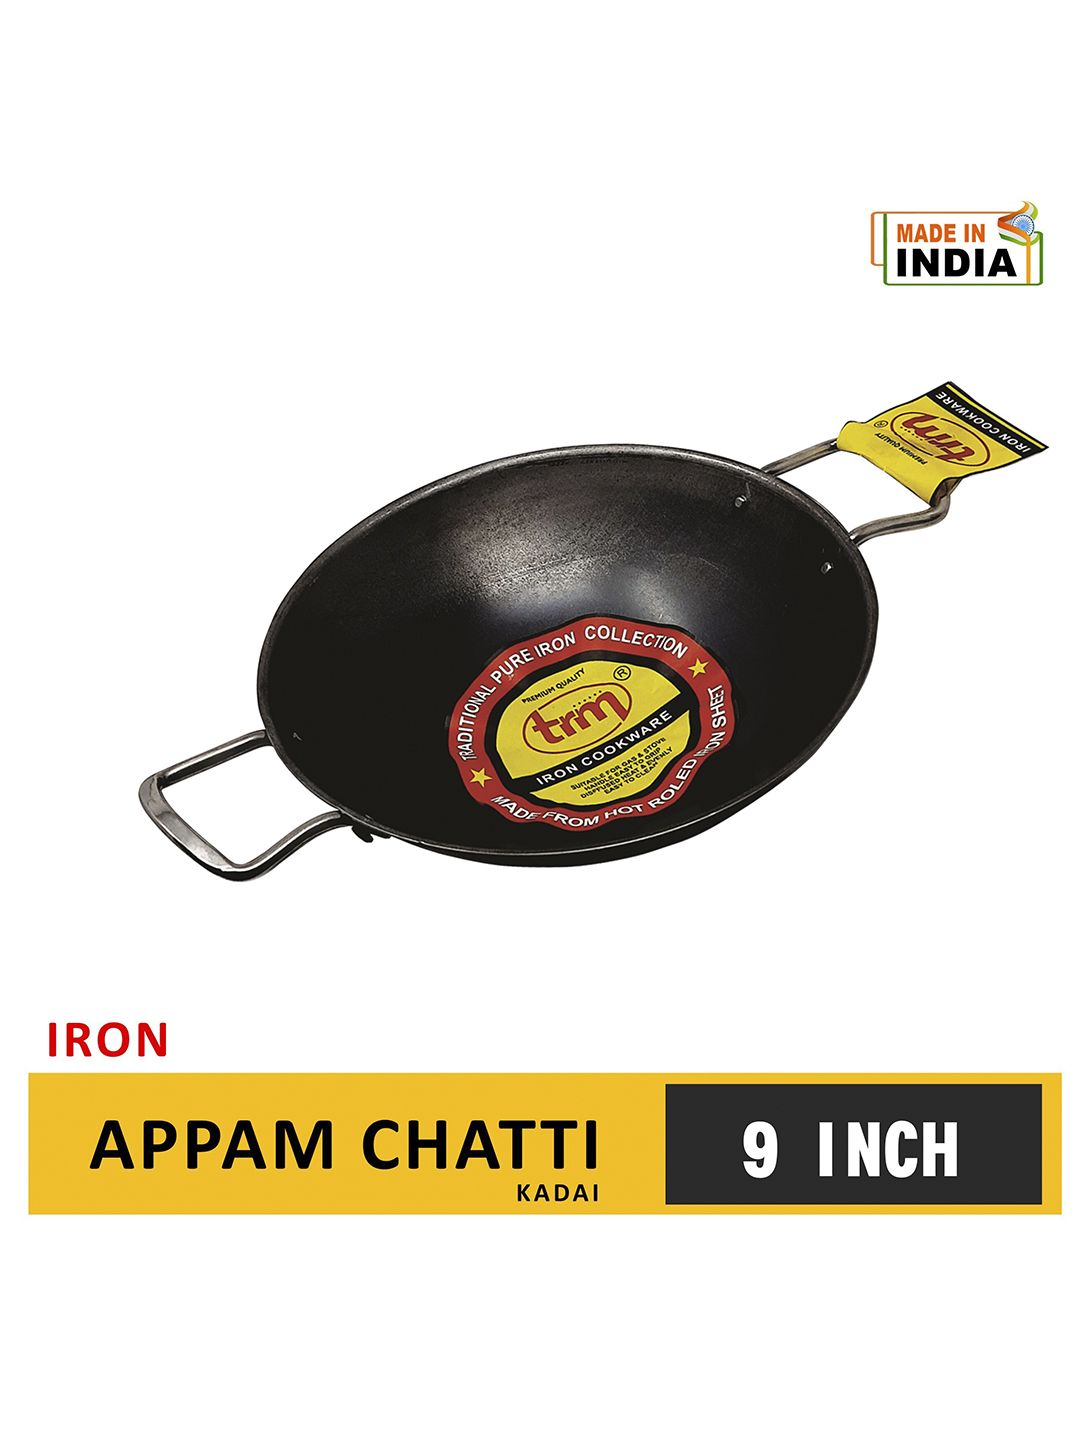 TRM Black Solid Pure Iron Appam Chatti Kadhai Price in India